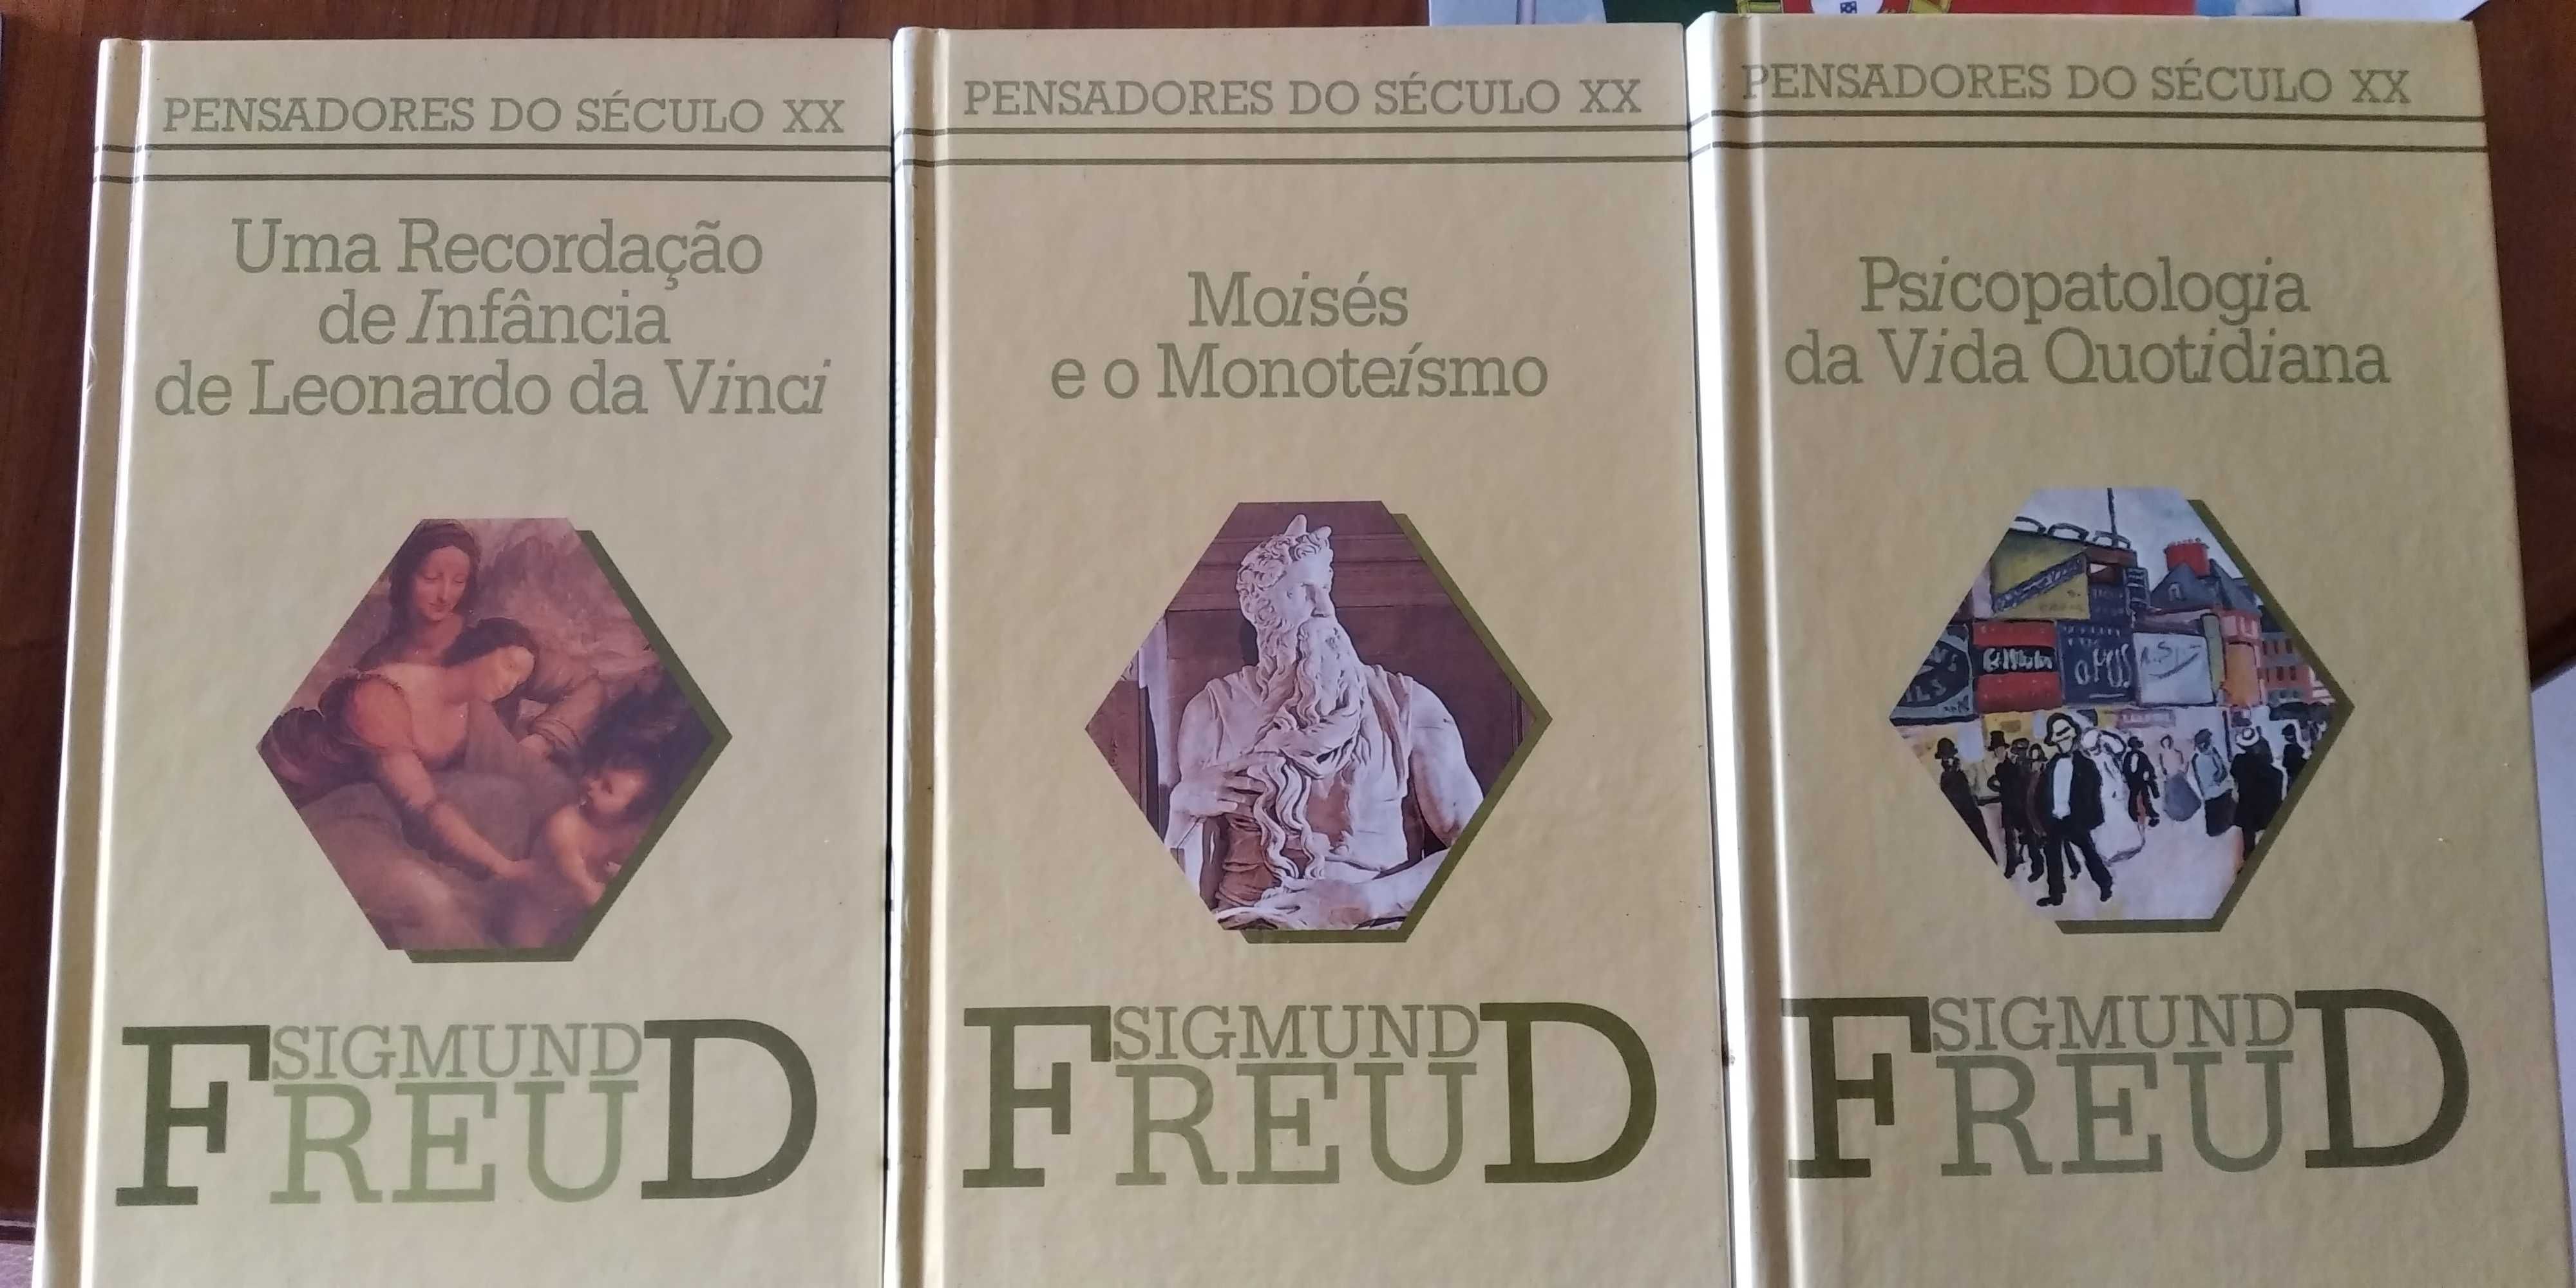 Salvat - Grandes Temas, Sigmund Freud, Roger Garaudy, Eugénio de Andr.